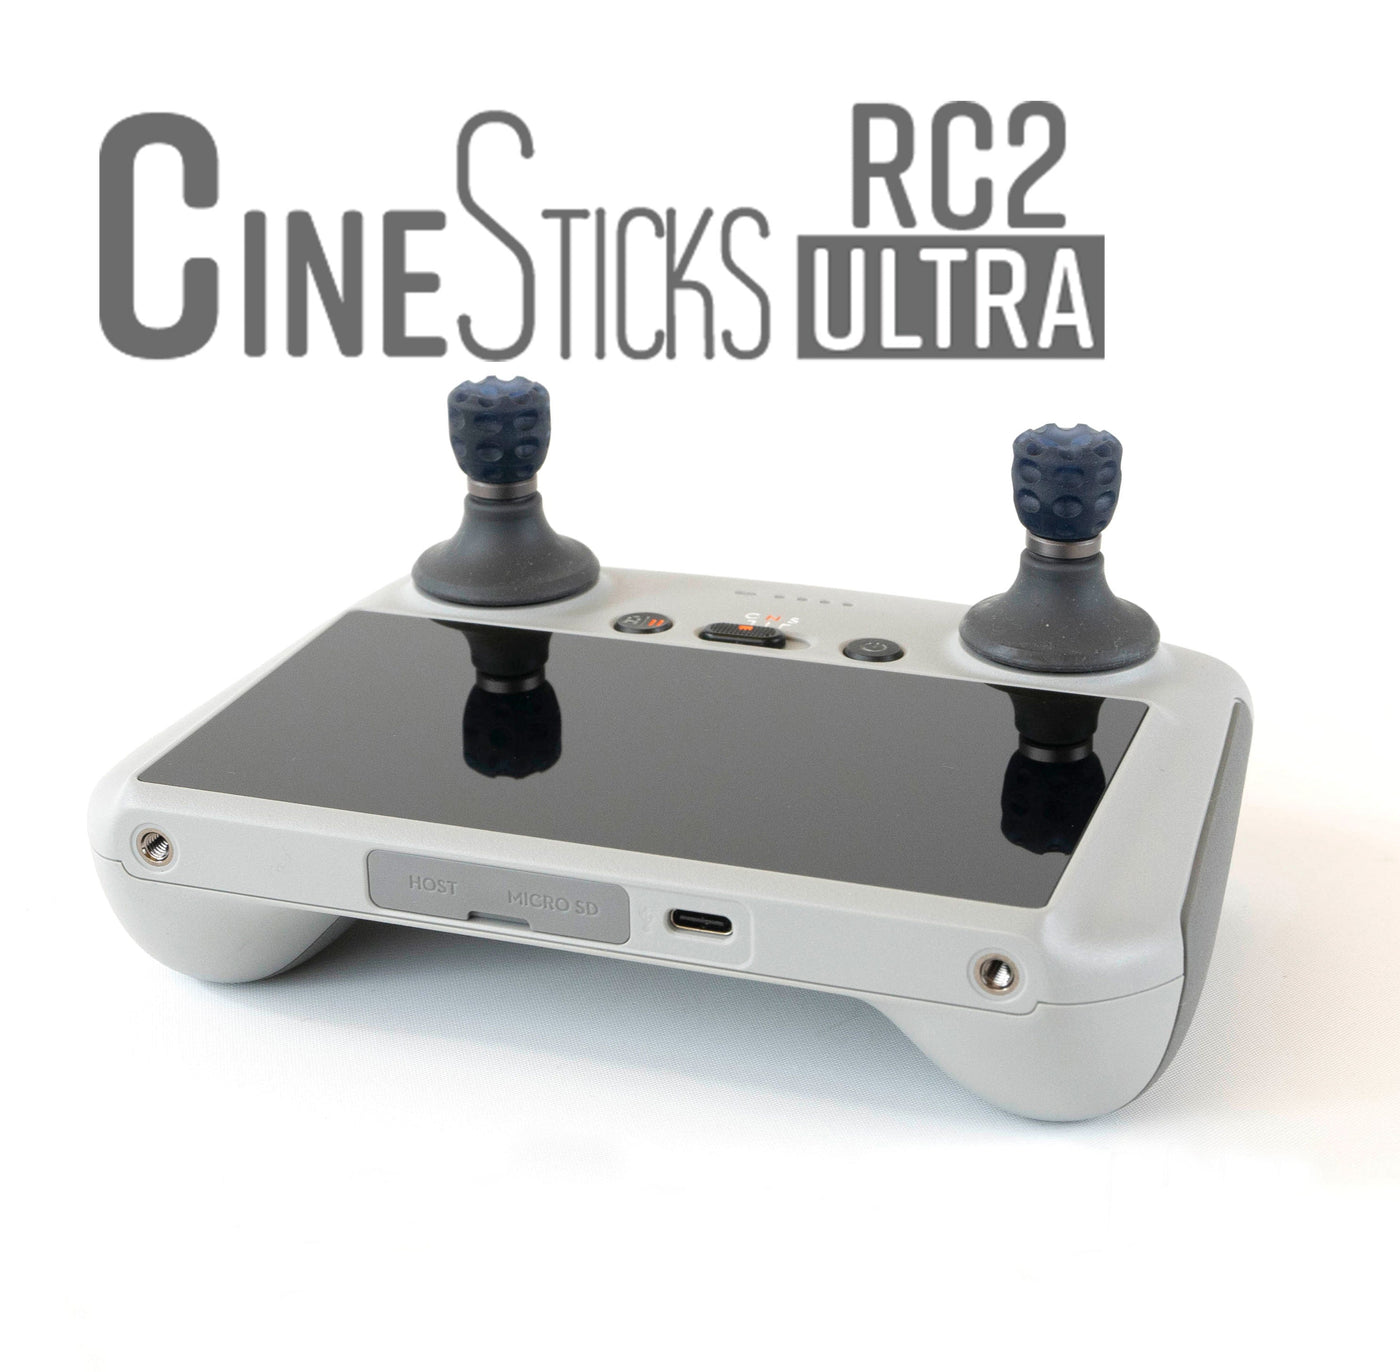 CineStick RC2 Ultra